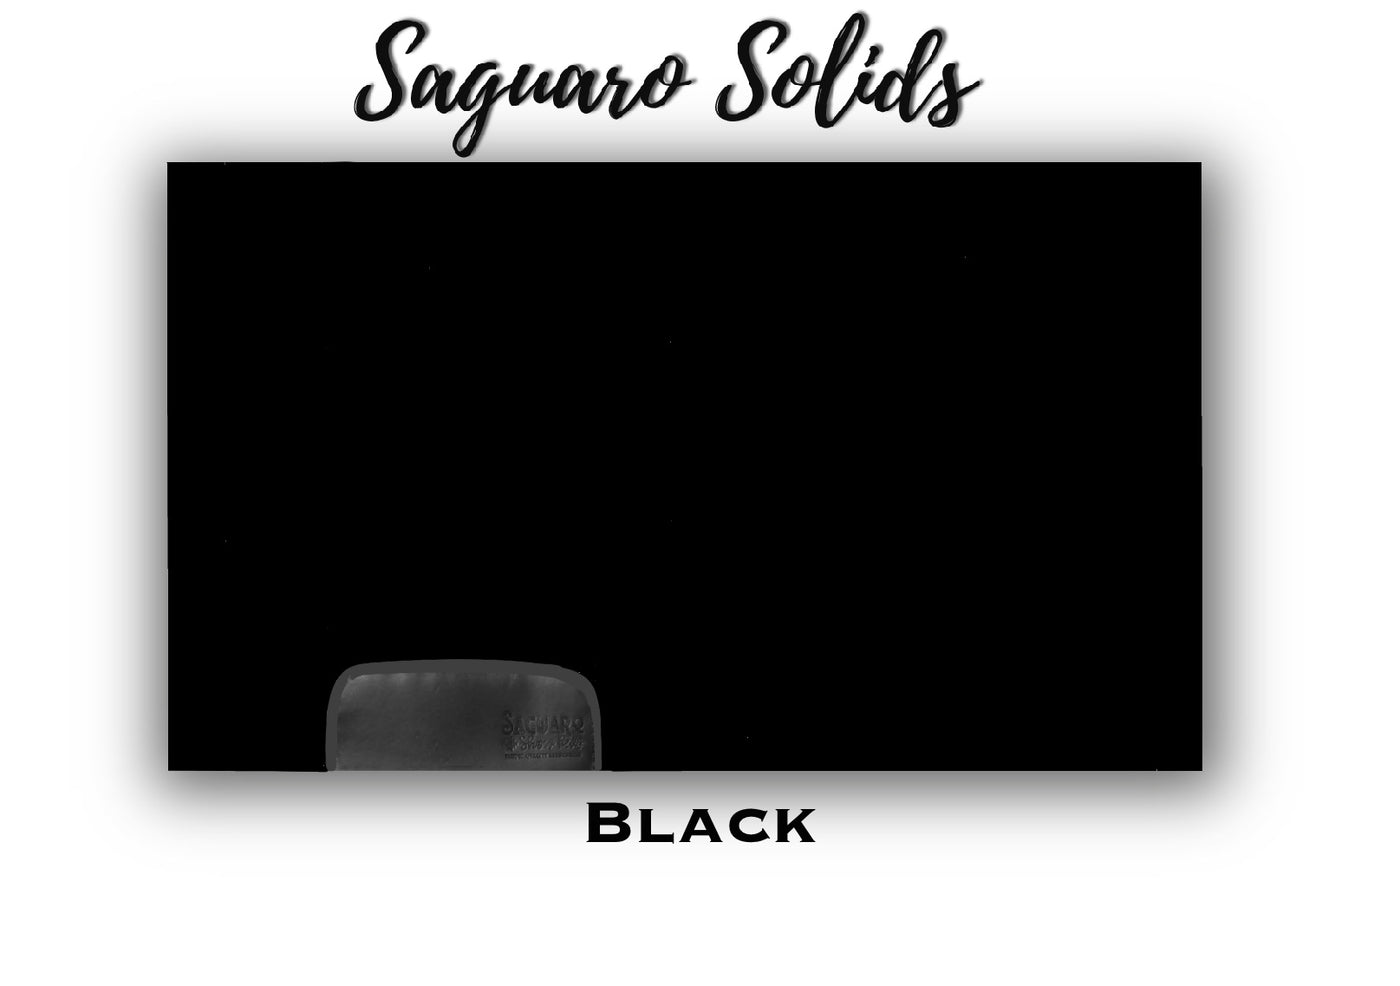 Saguaro Solid "Black" Show Pad (SEMI-CUSTOM)